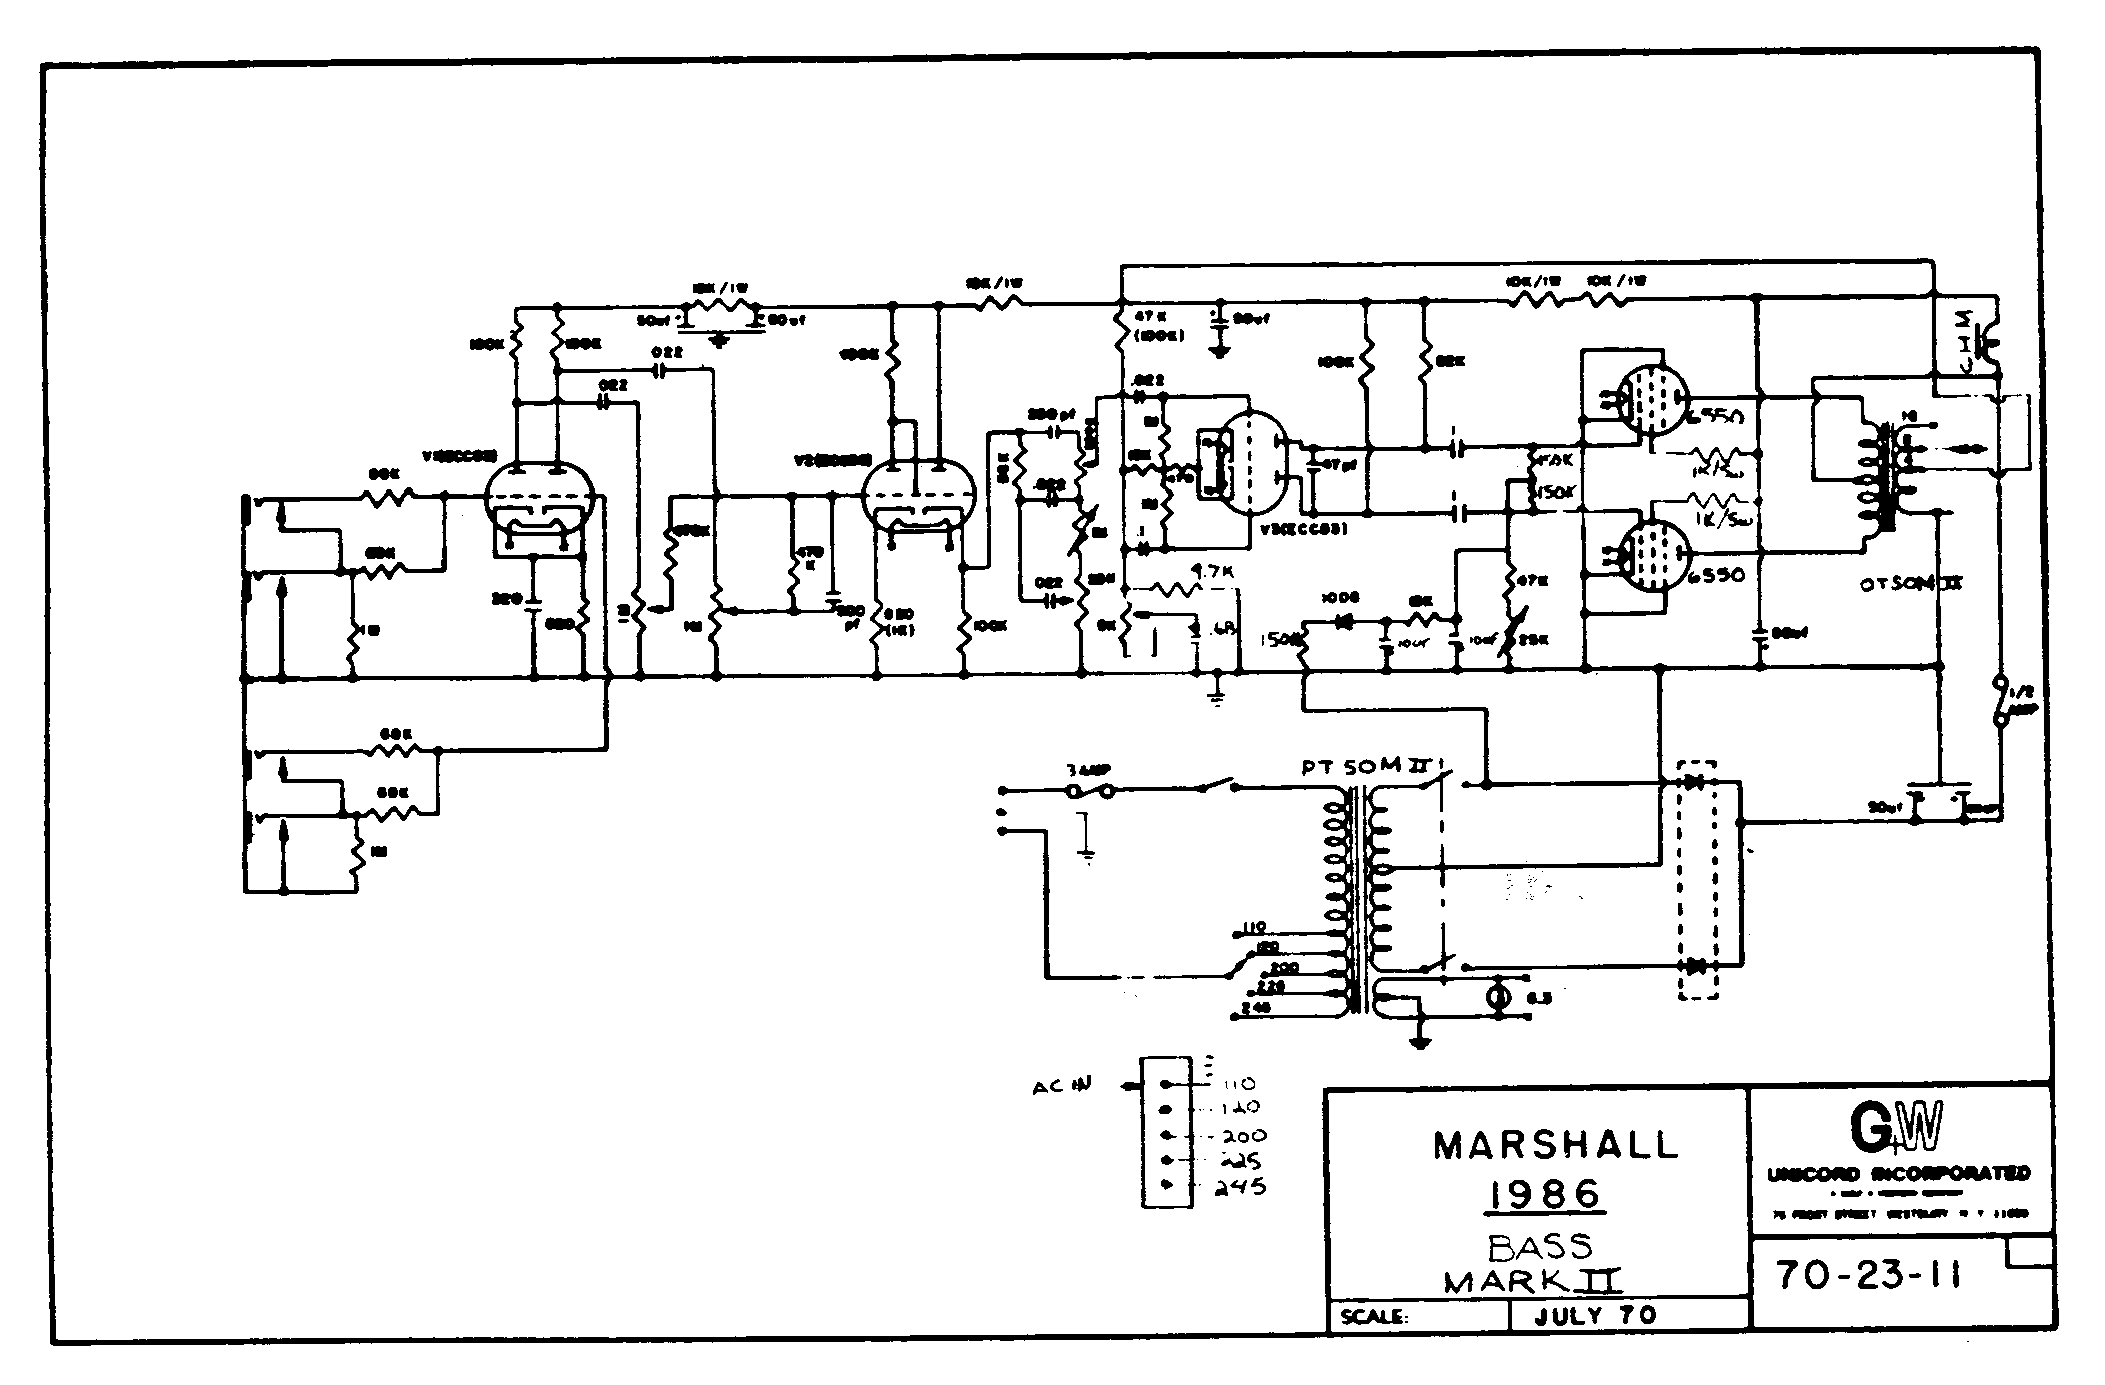 Marshall Bass Mark II Schematic